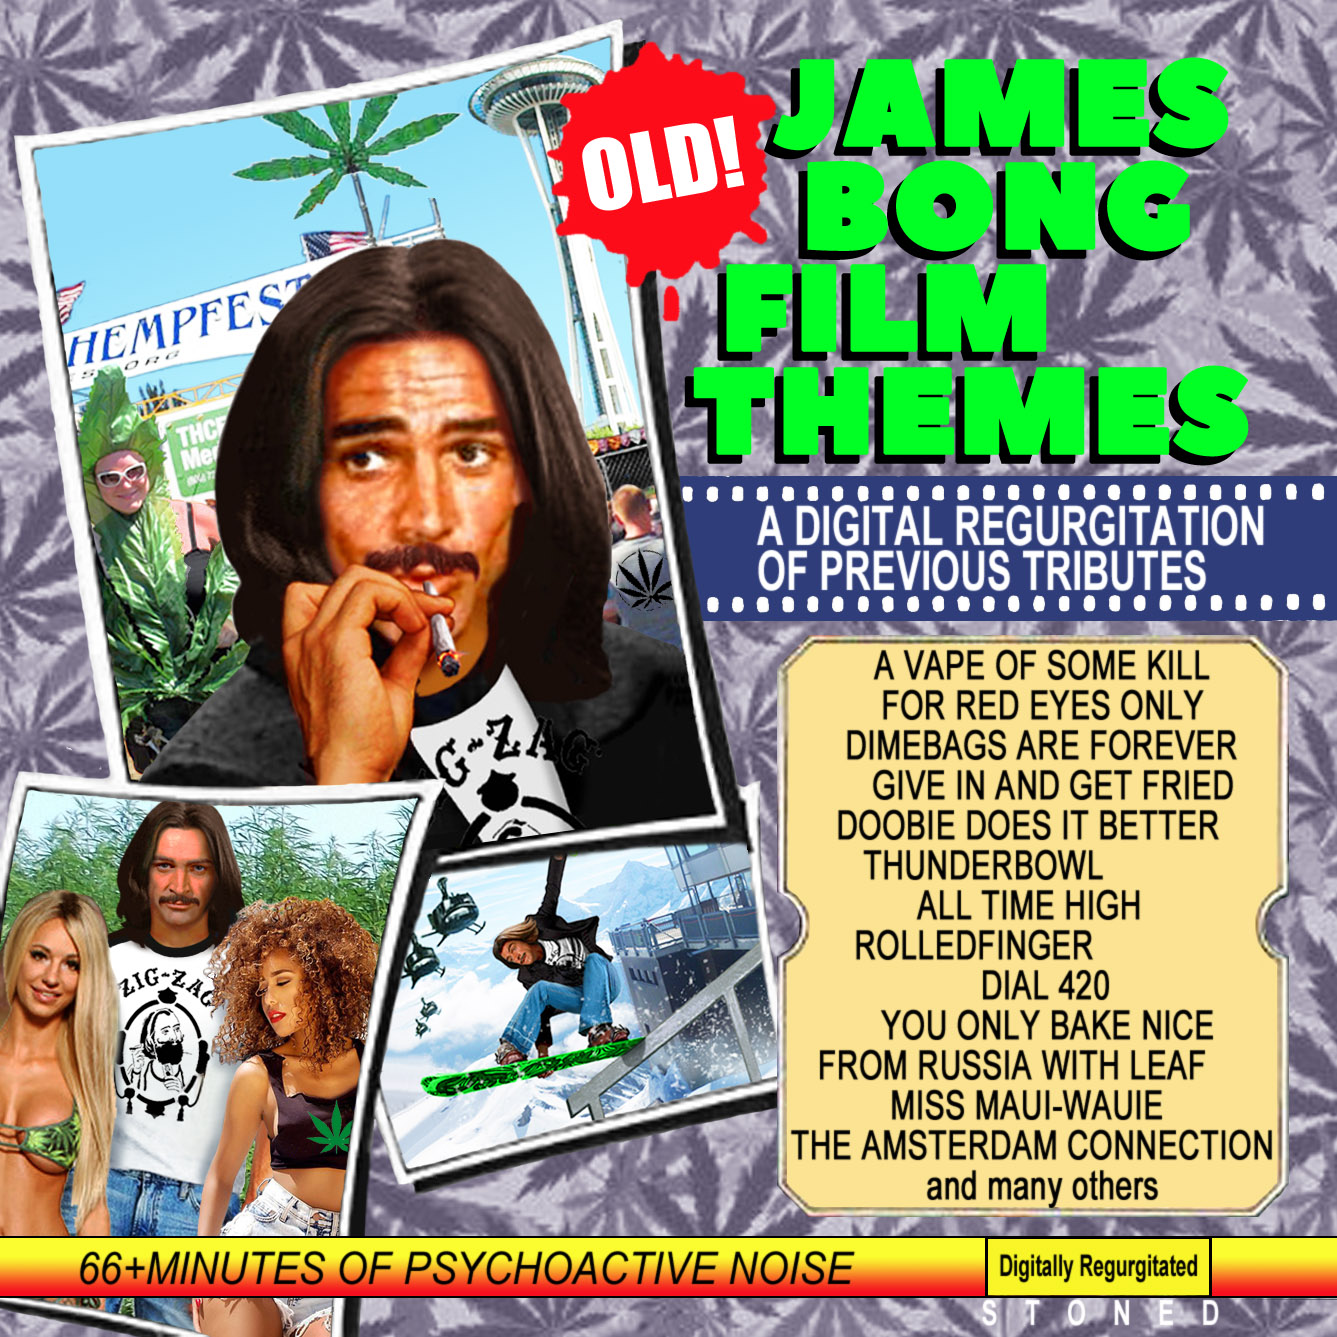 Album cover parody of James Bond Film Themes: A Digital Synsation By Star Inc. by James Bond themes